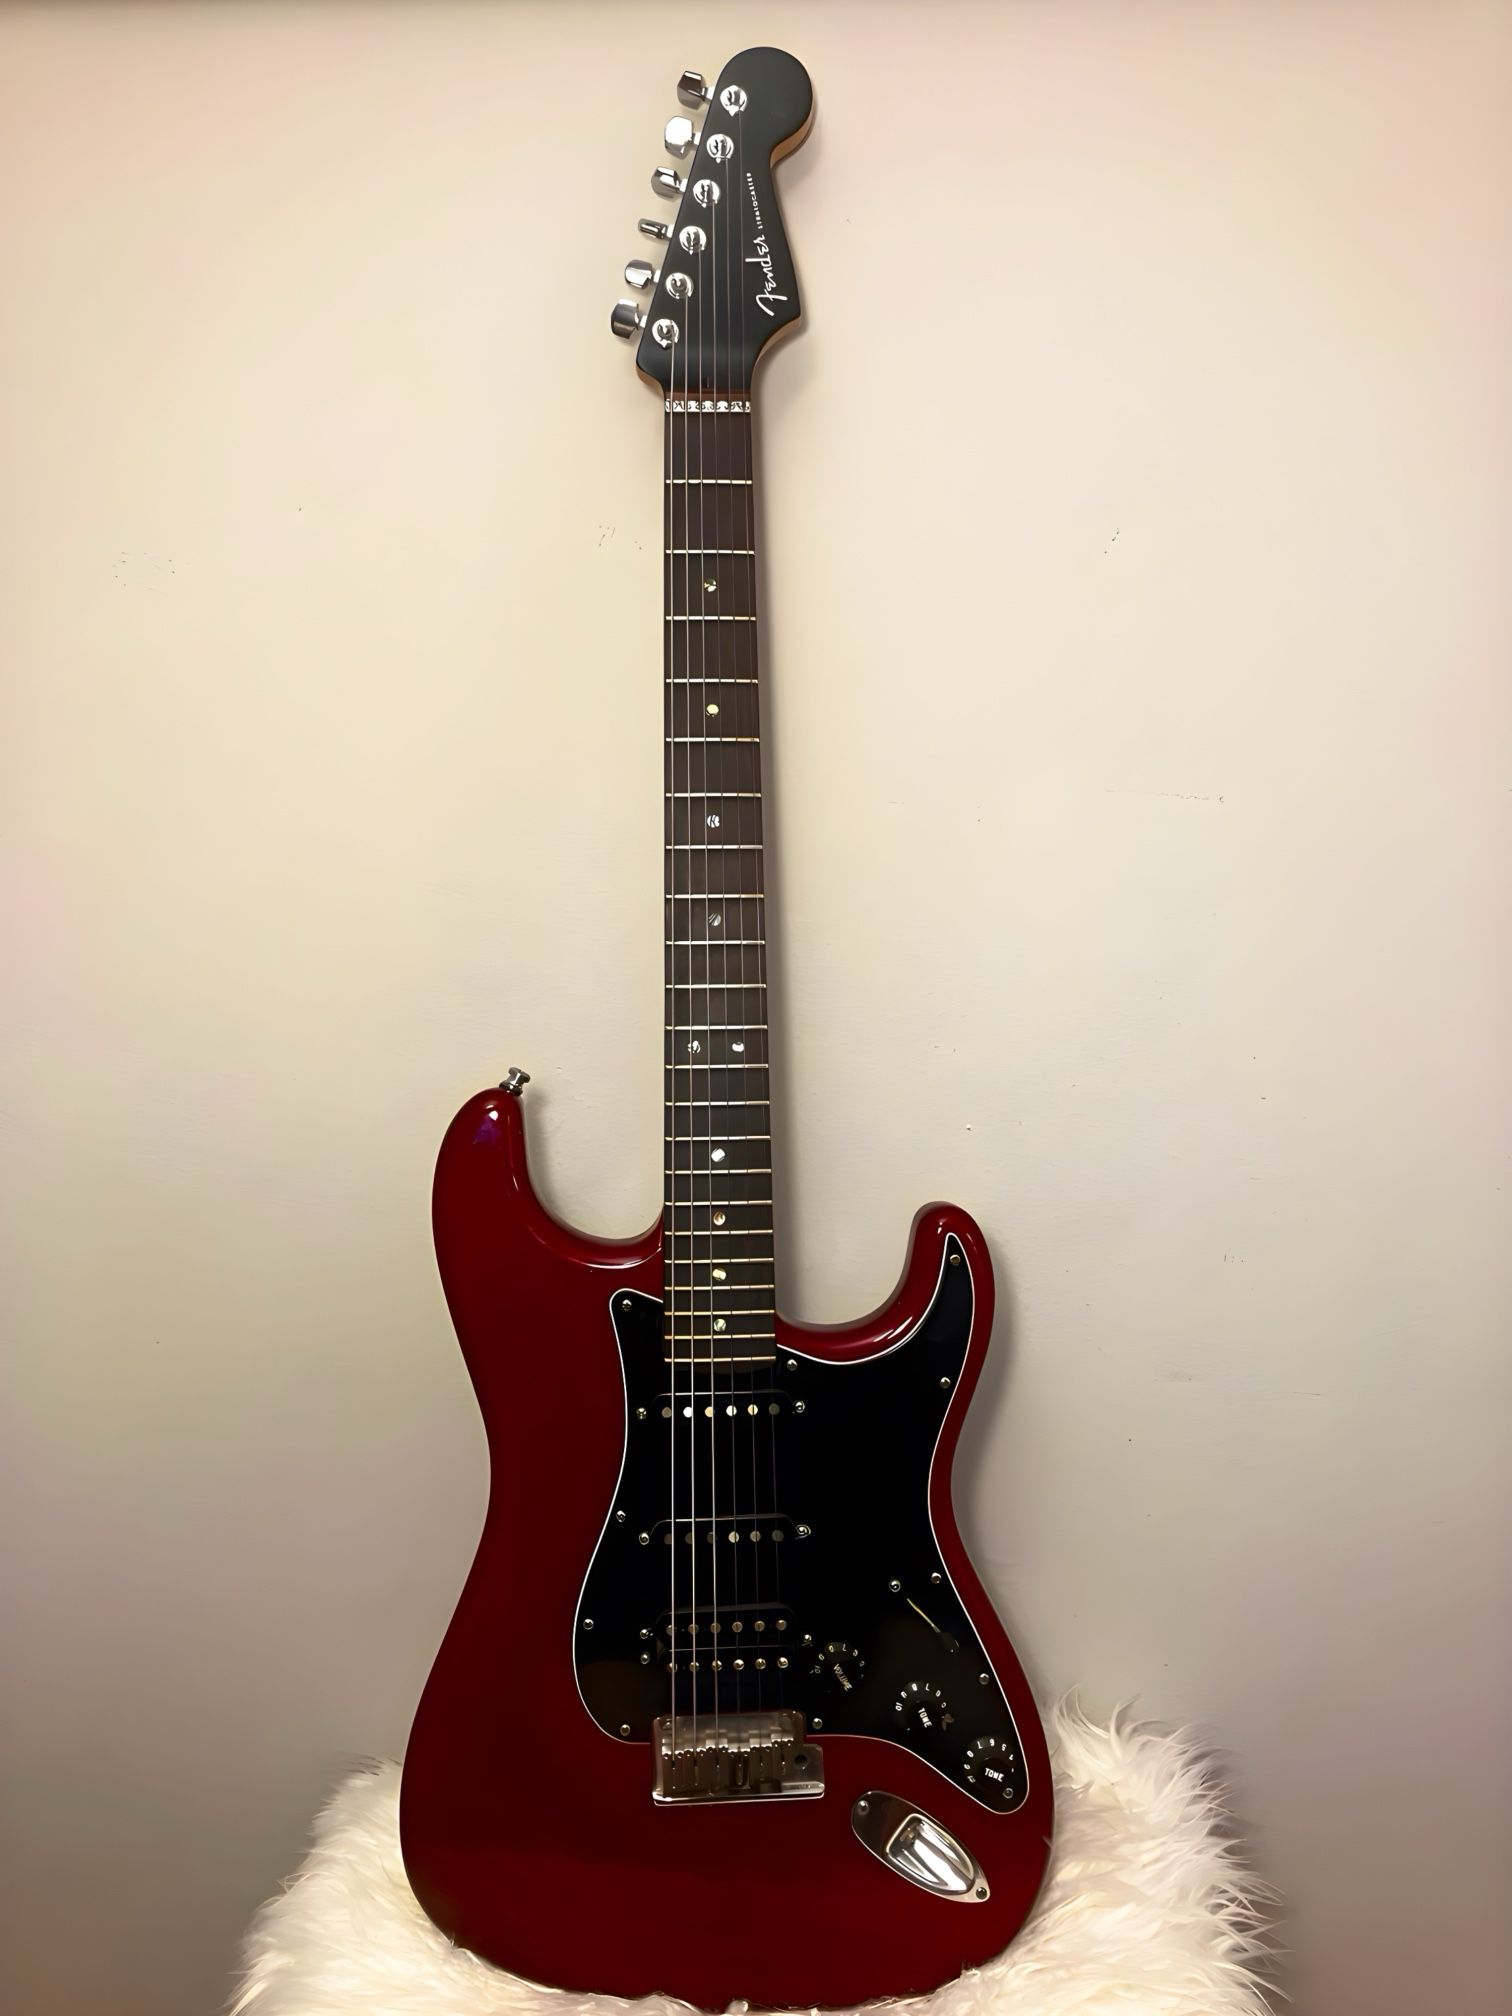 Fender American Stratocaster 2010 Mahogany Body. Molded Hardshell Case Included